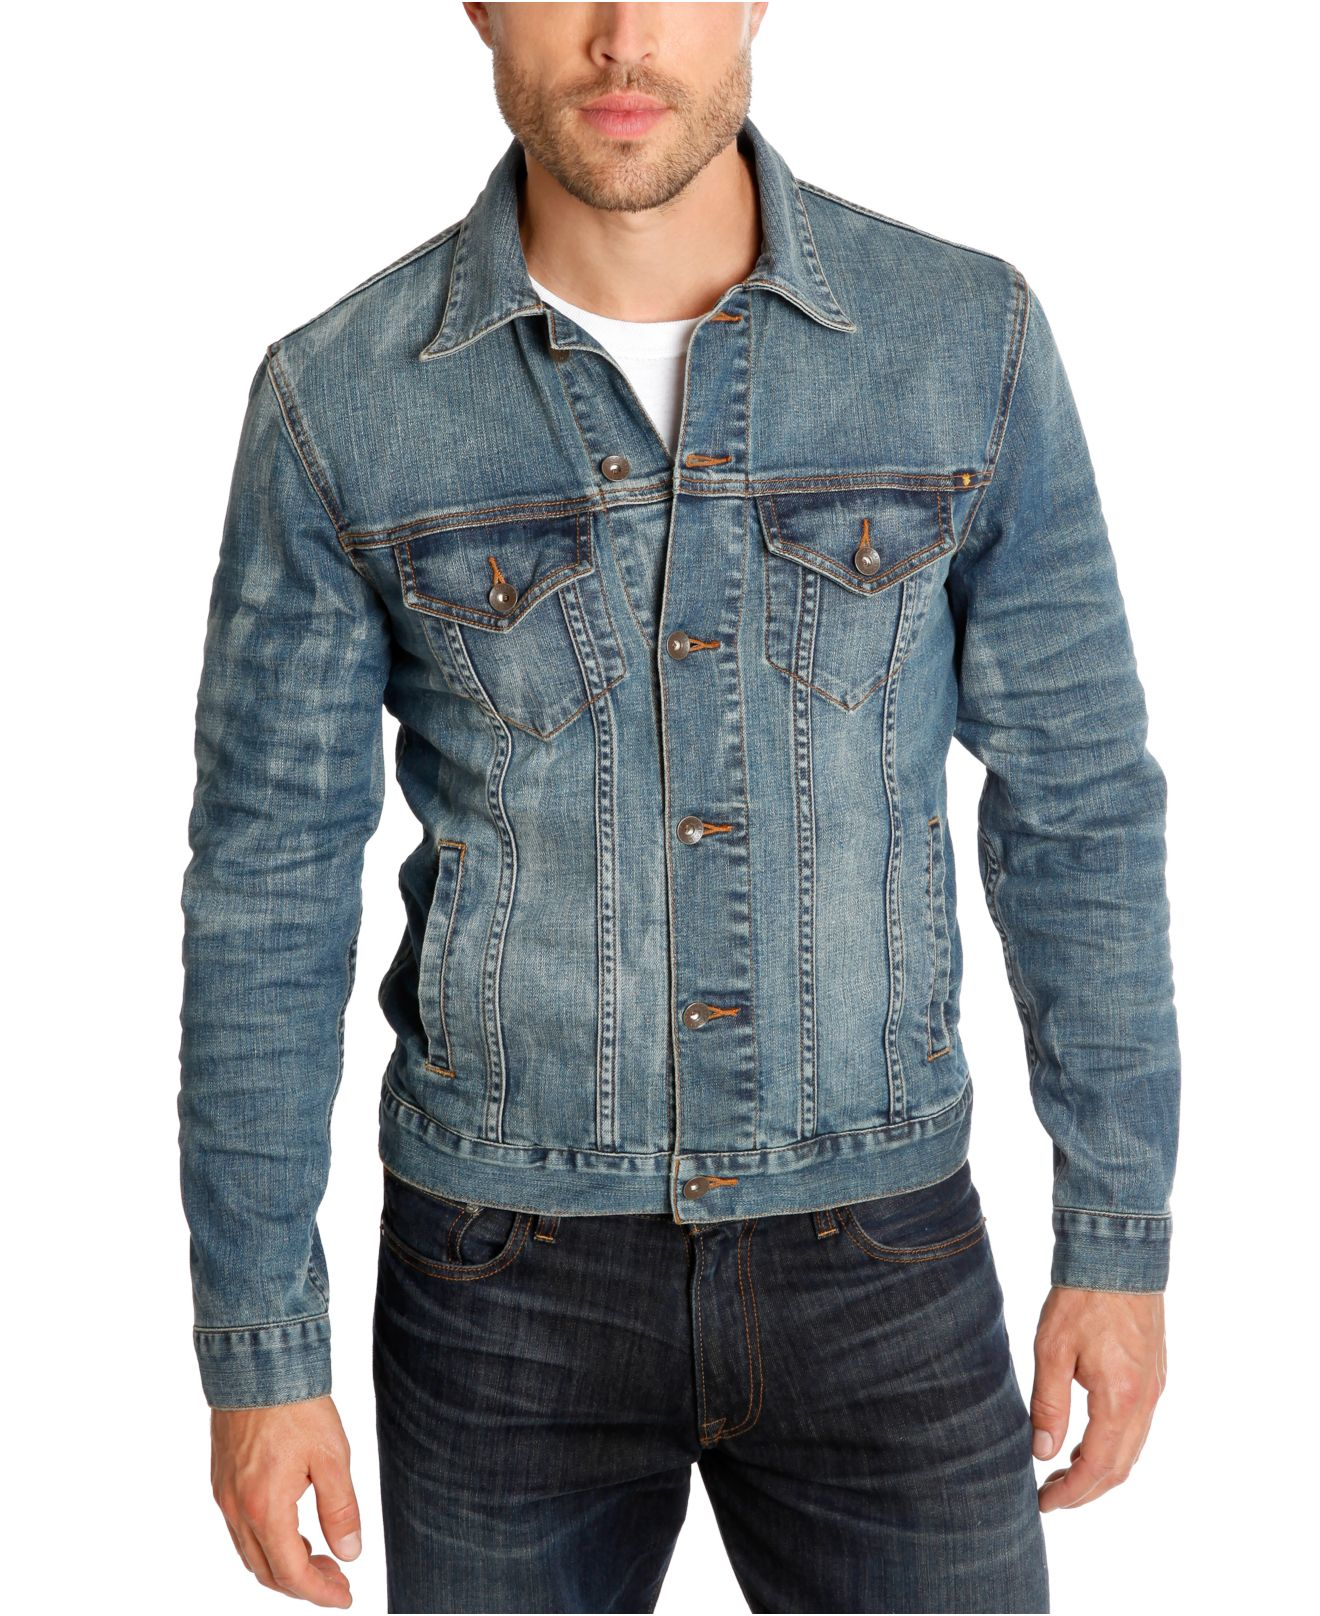 Lucky Brand Lakewood Denim Jacket in Blue for Men - Lyst